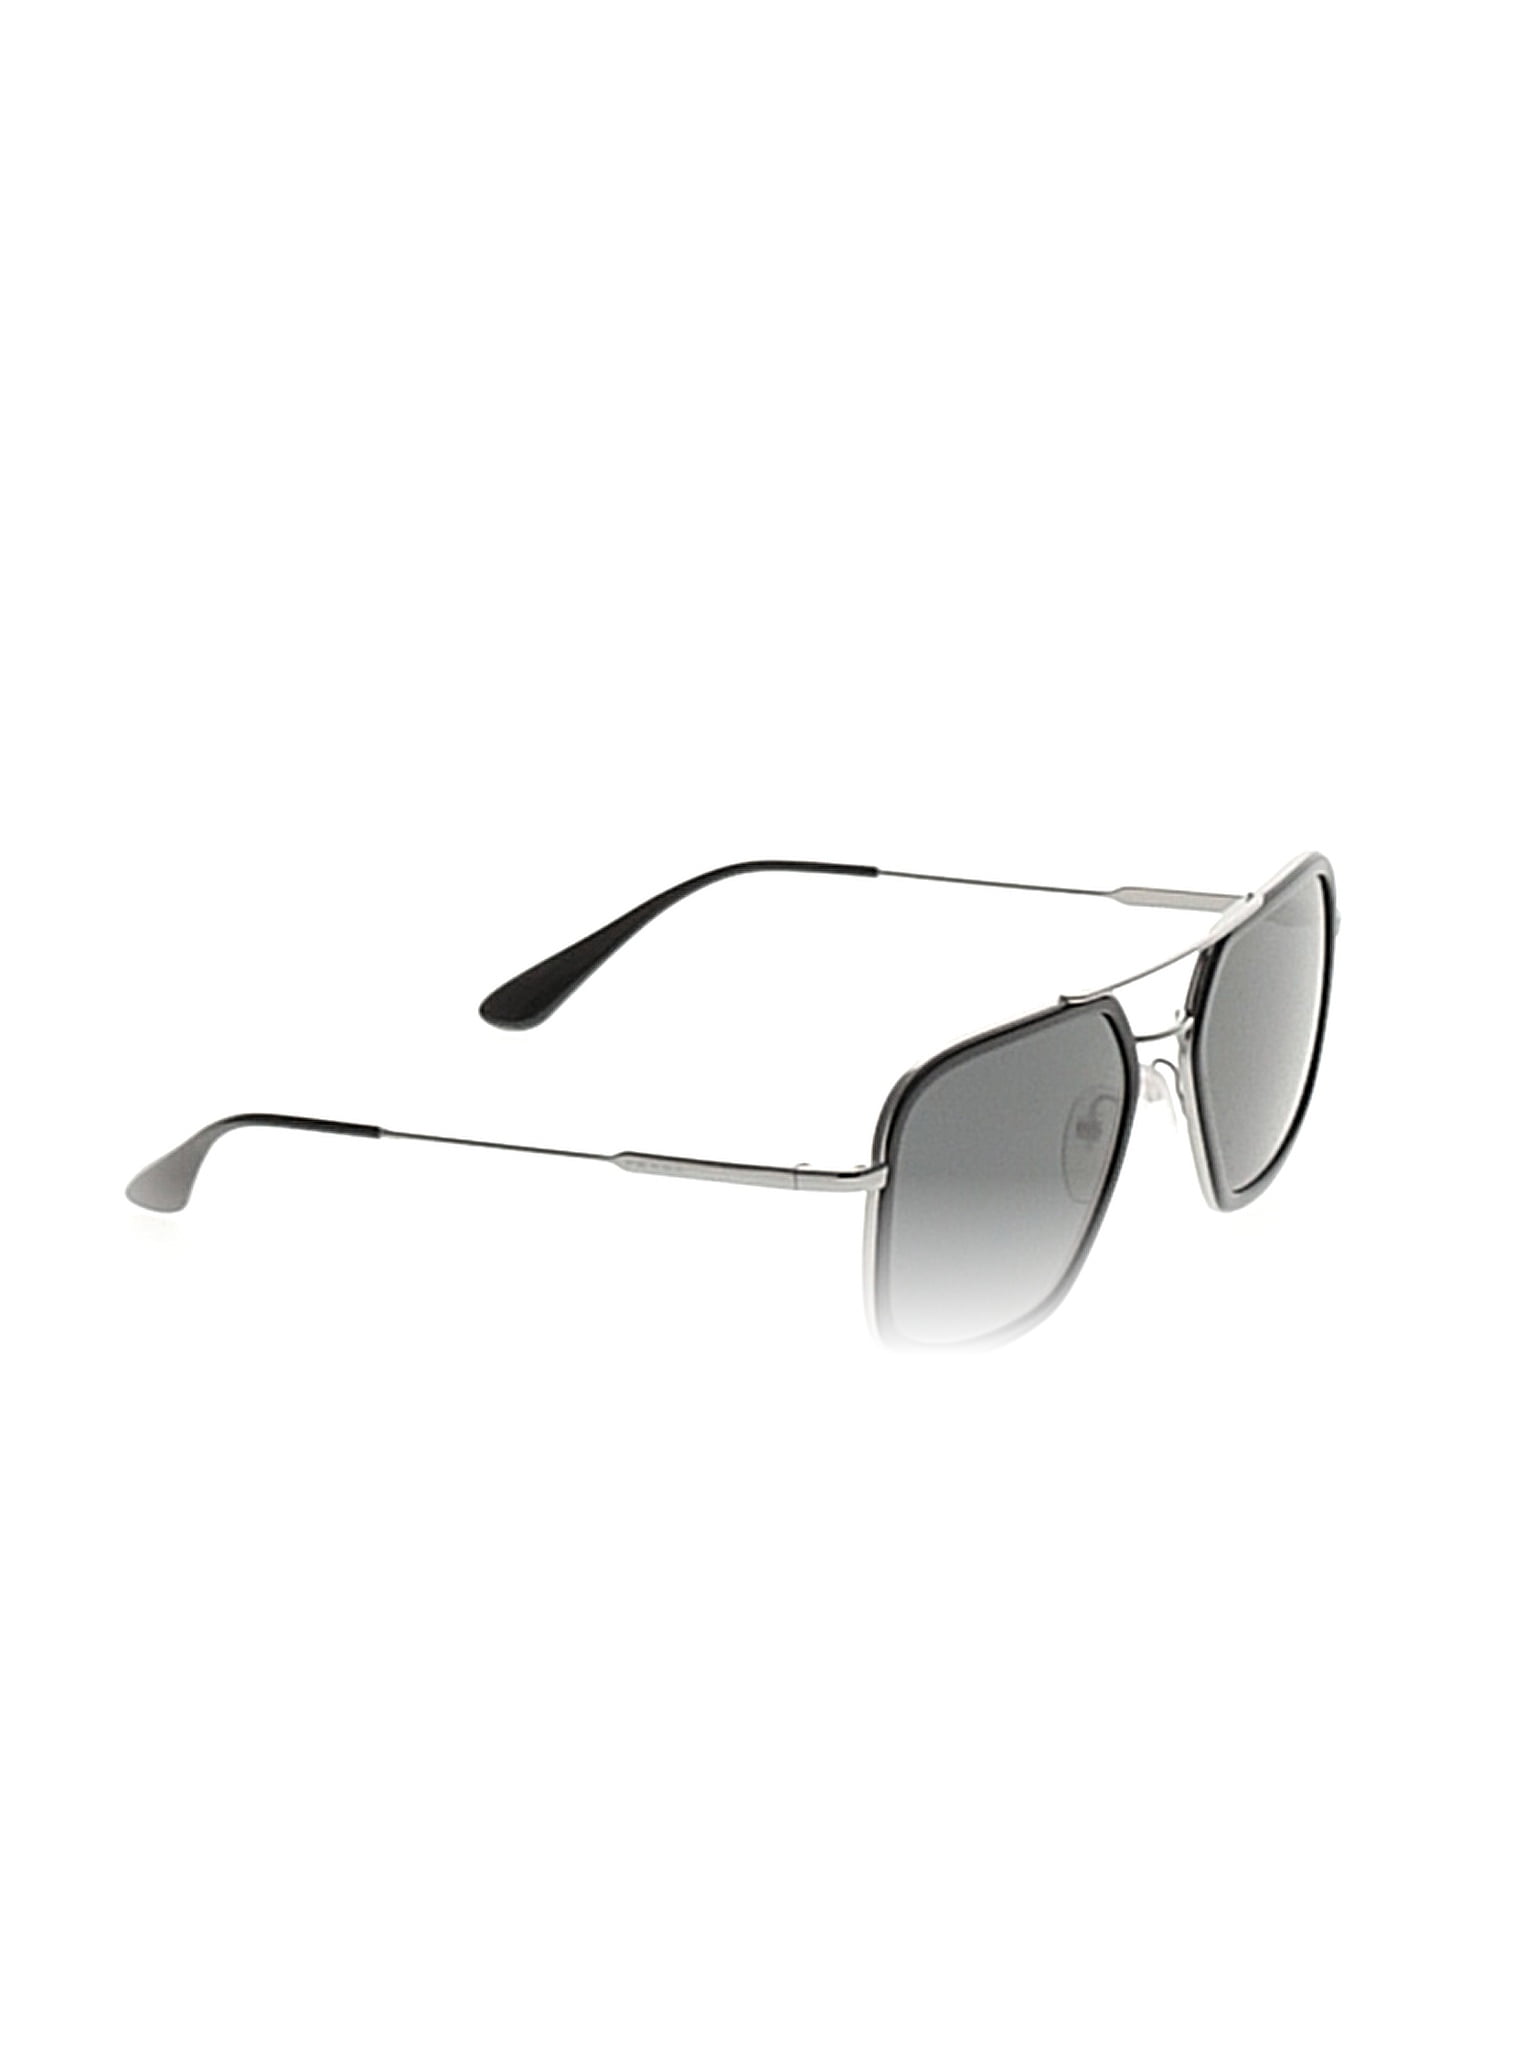 Prada Solid Gray Silver Sunglasses One Size - 49% off